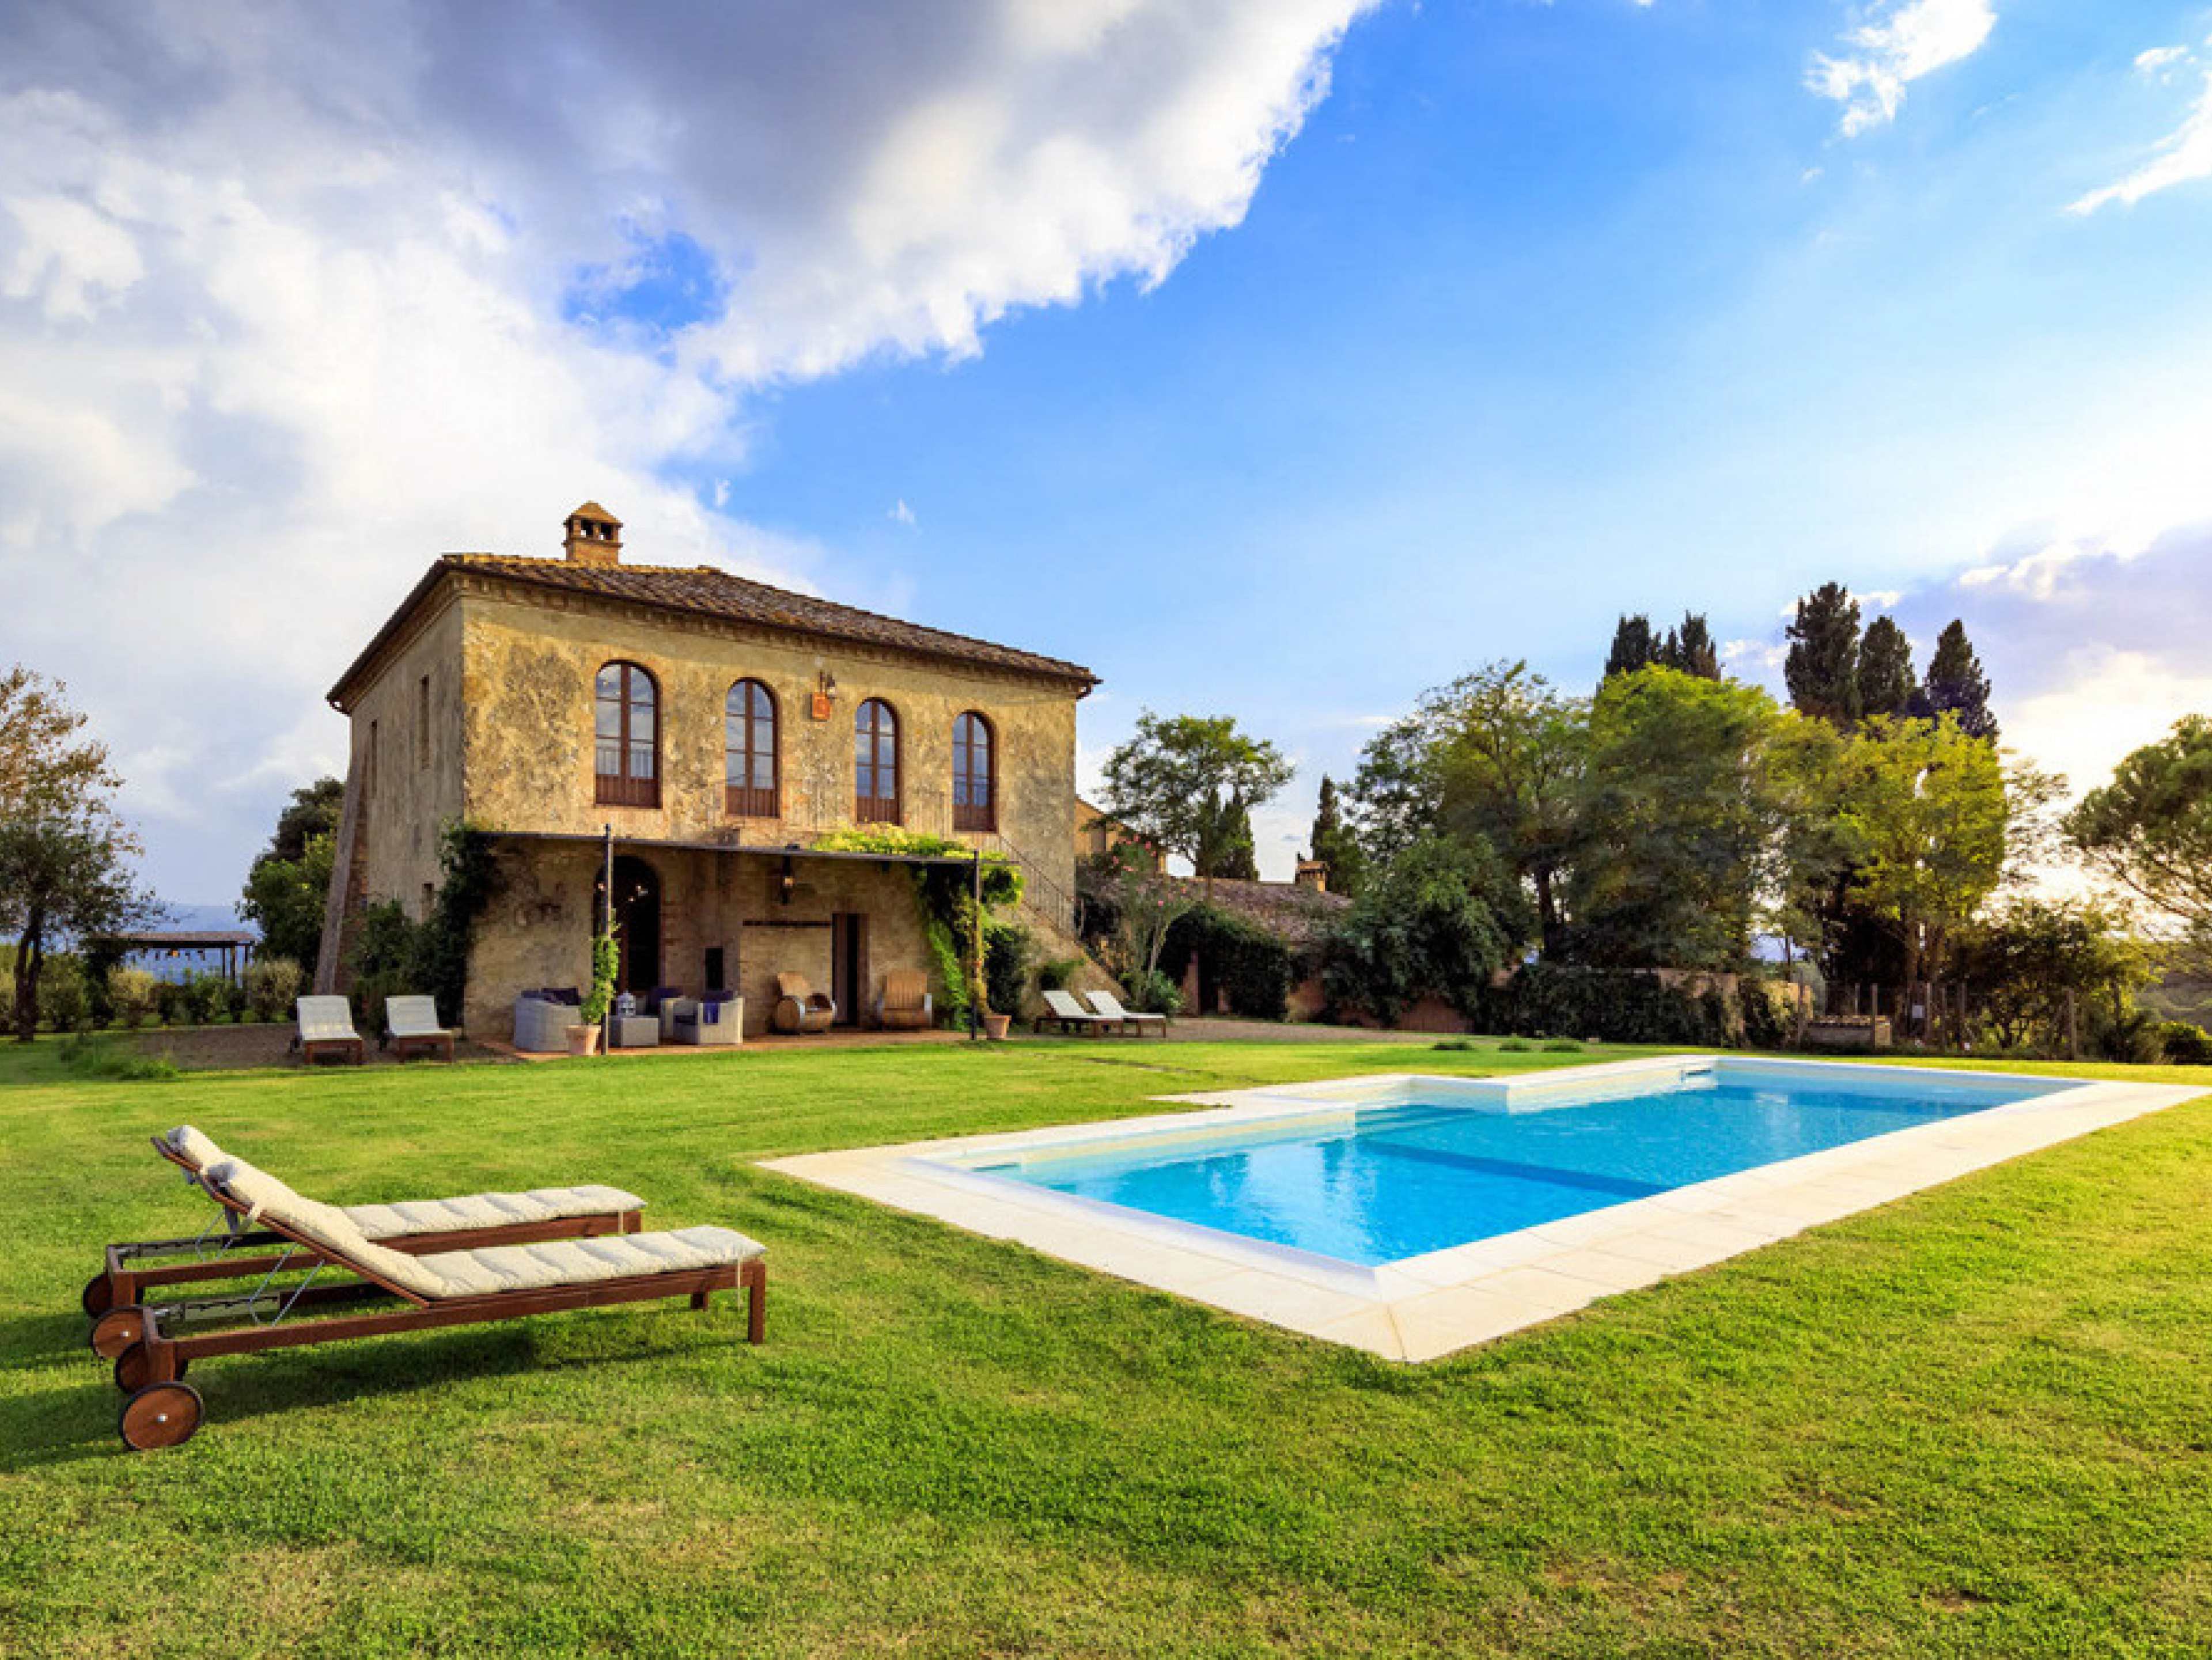 Lagesta Siena vacation rentals for the Palio